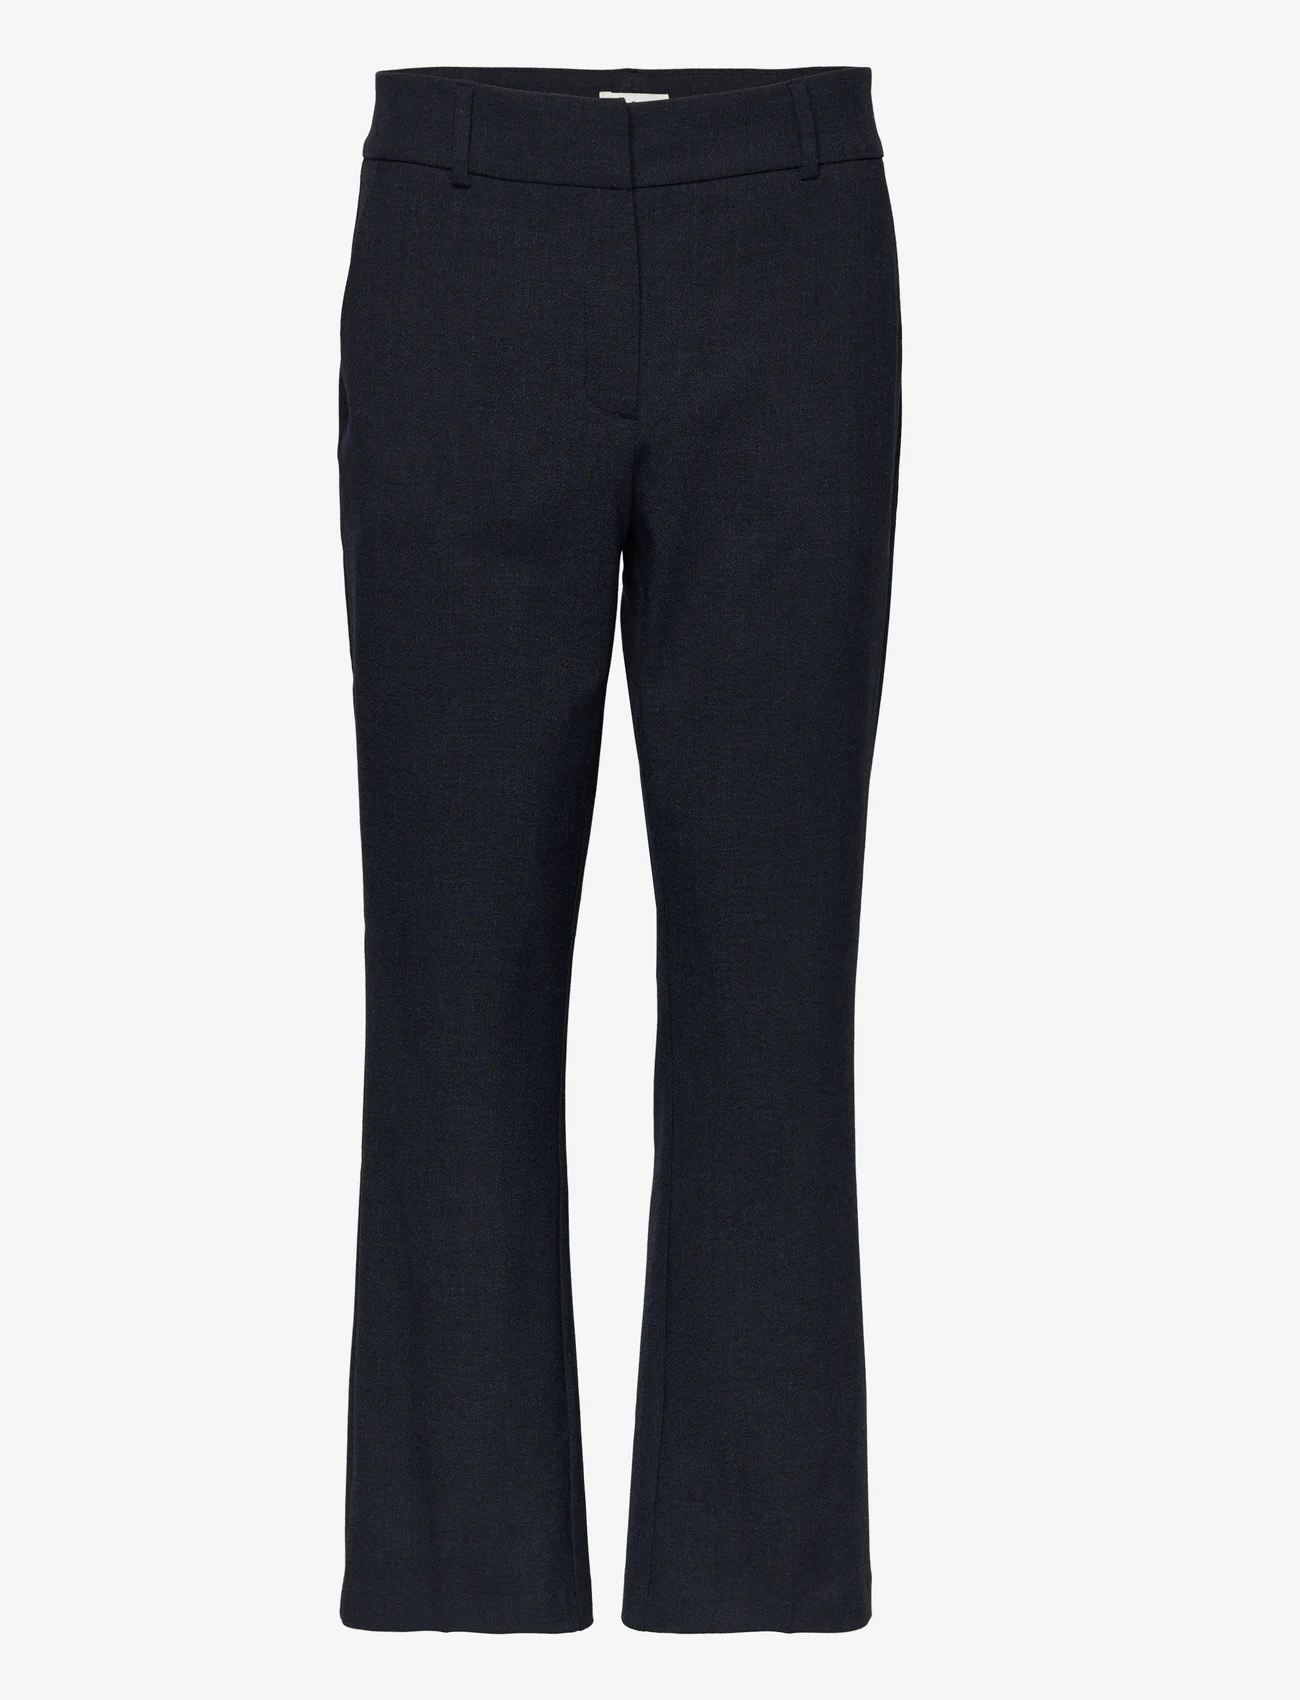 FIVEUNITS - Clara Ankle - trousers - blue grey melange - 0